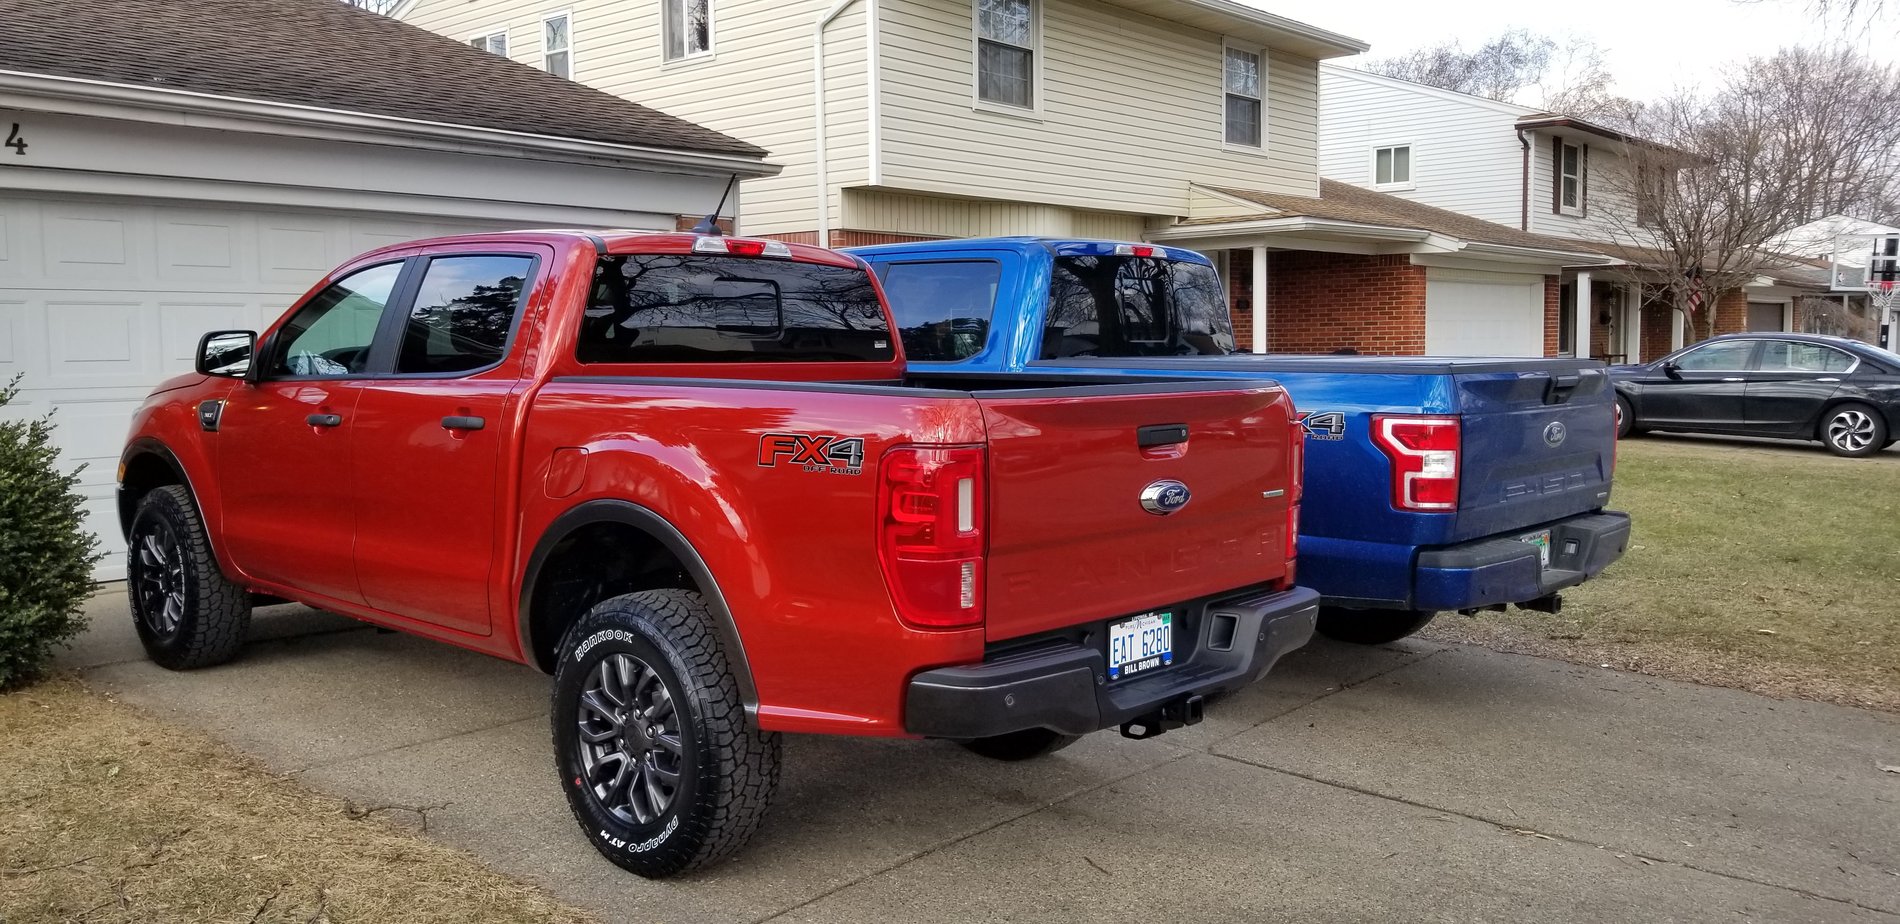 Ford Ranger Couple of Compare Shots - F150, Taco, Colorado 20190319_172919